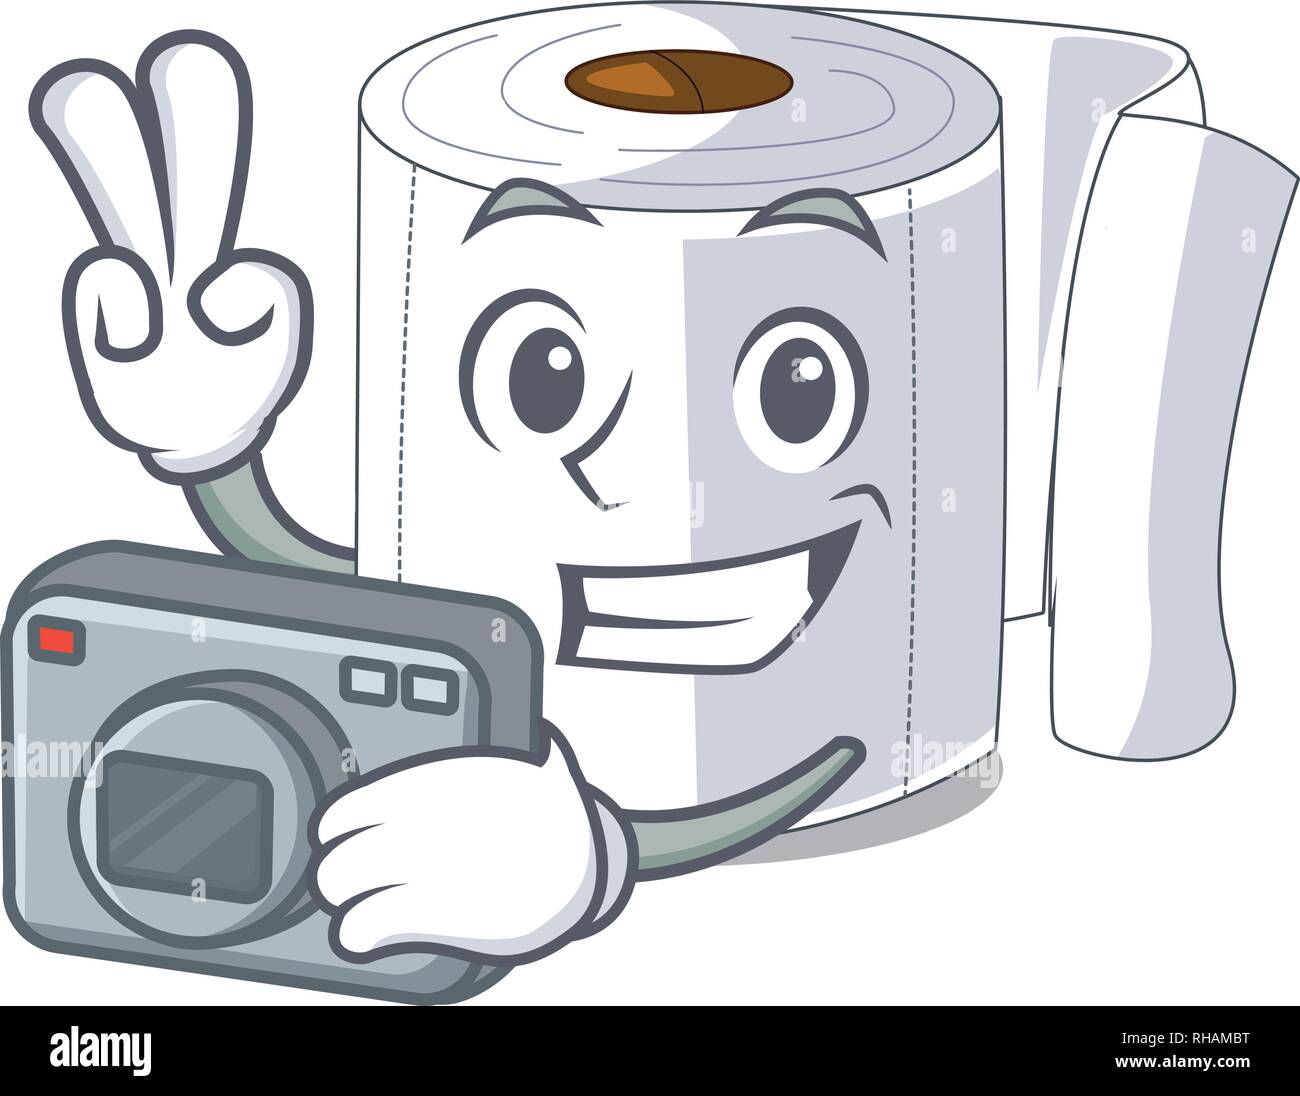 Photographer toilet paper in shape of mascot Stock Vector